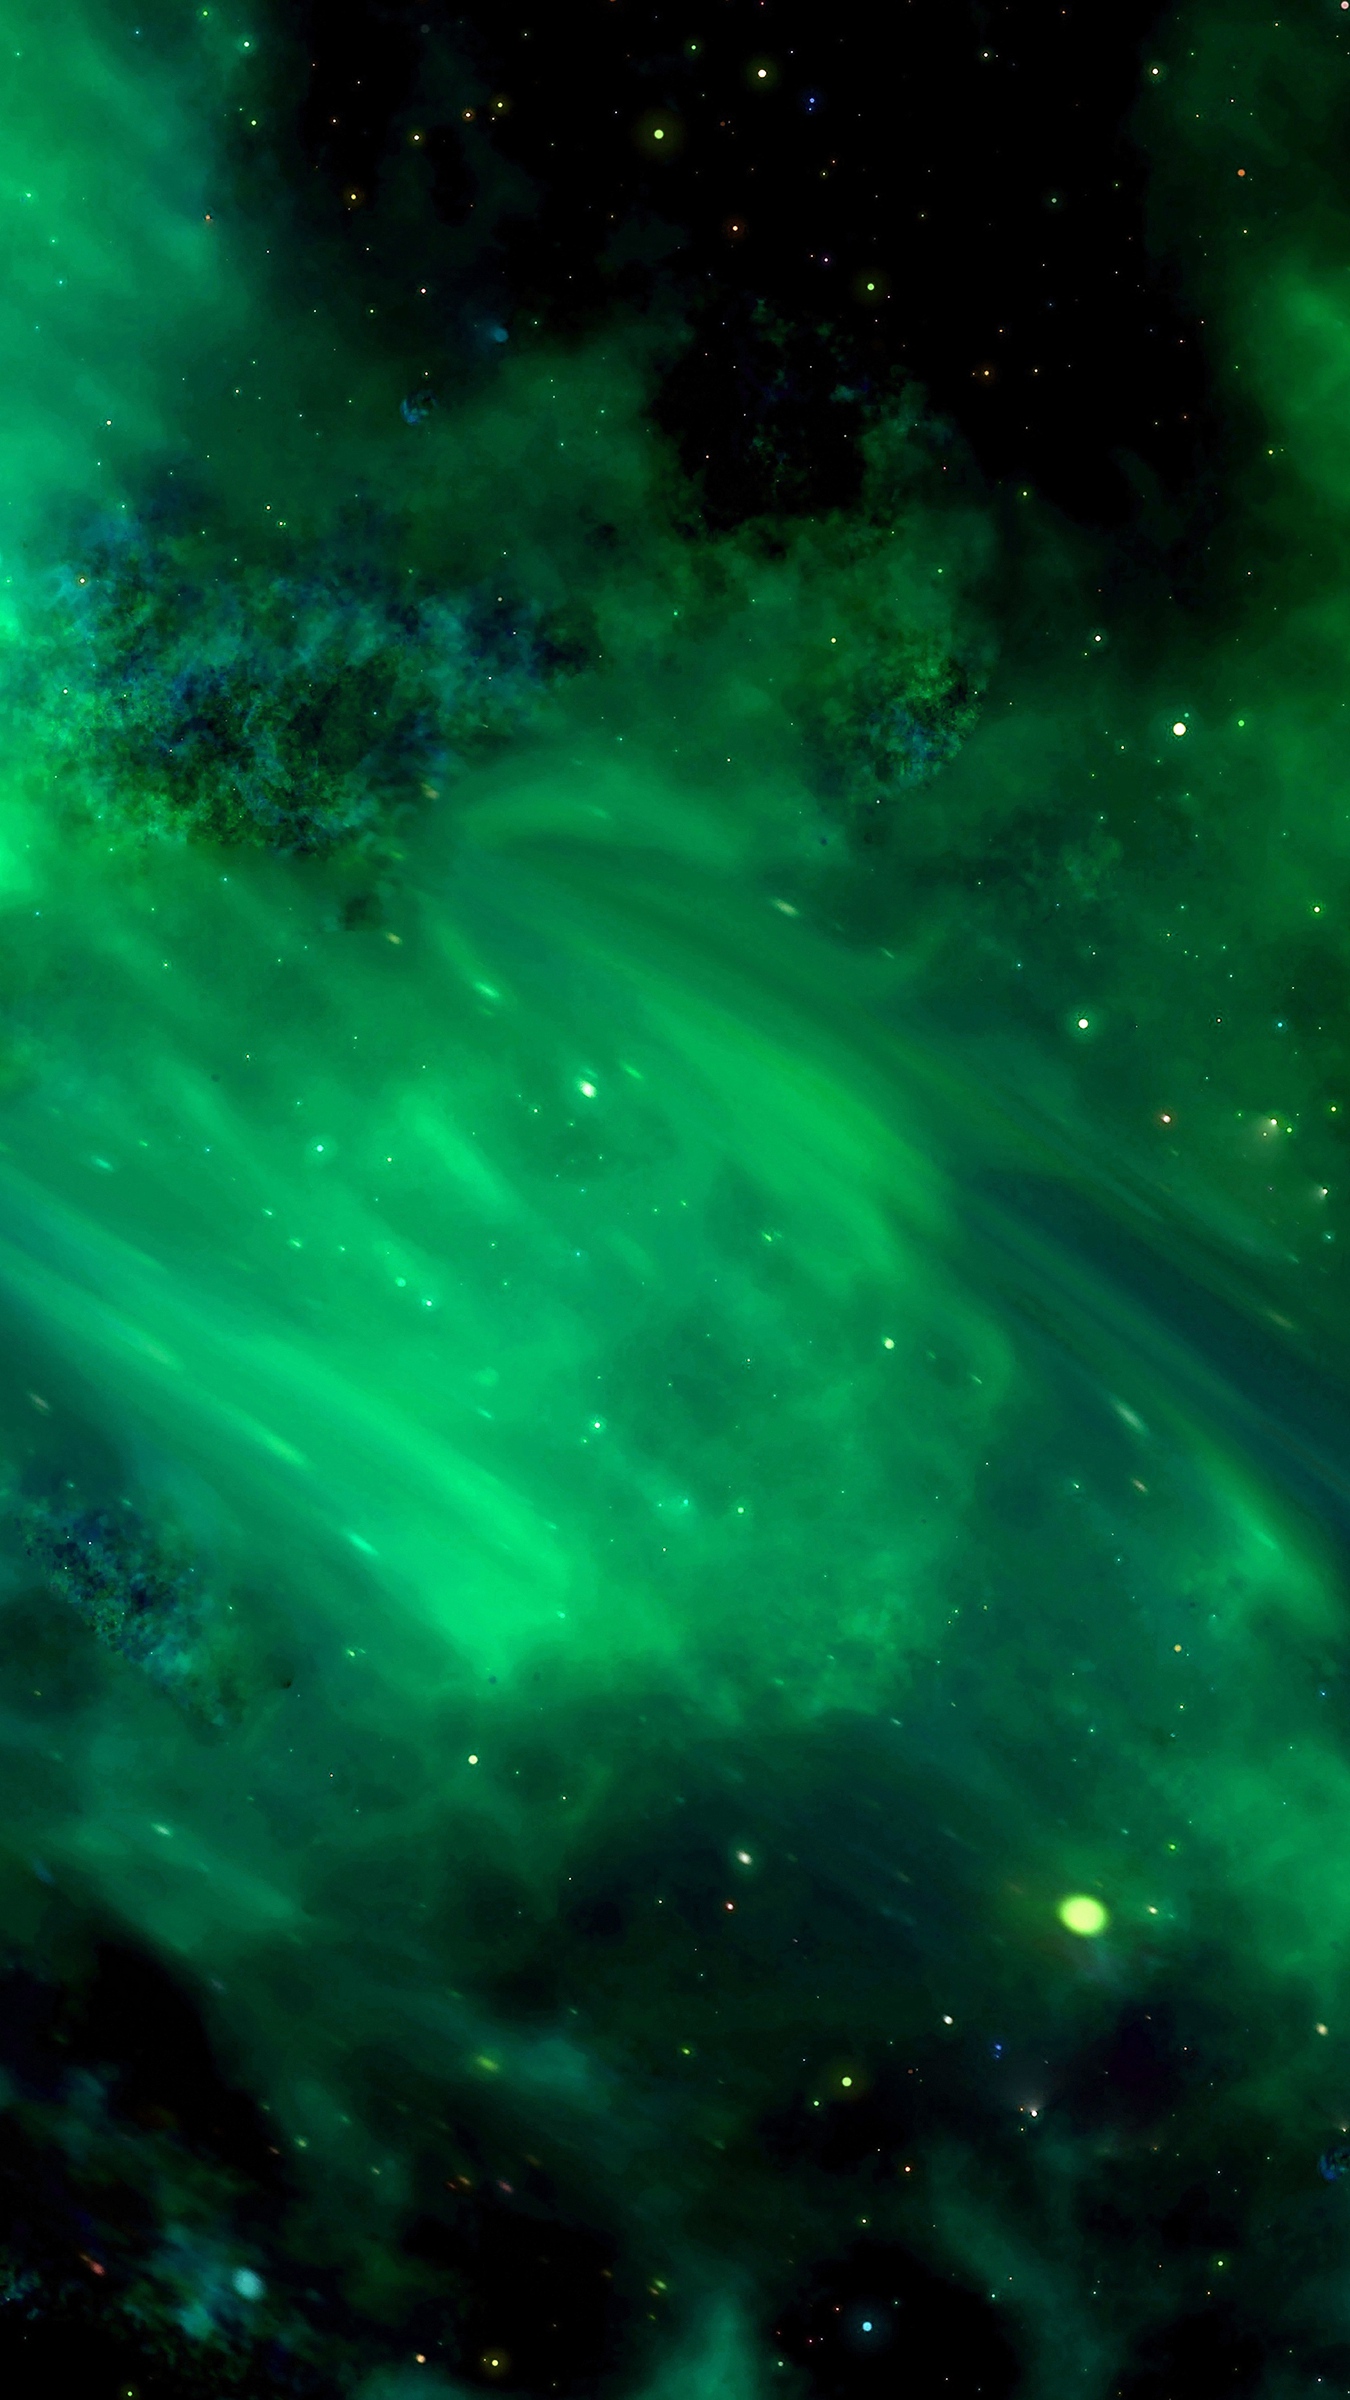 galaxy note 3 wallpaper hd 1080p,green,nature,sky,nebula,aurora